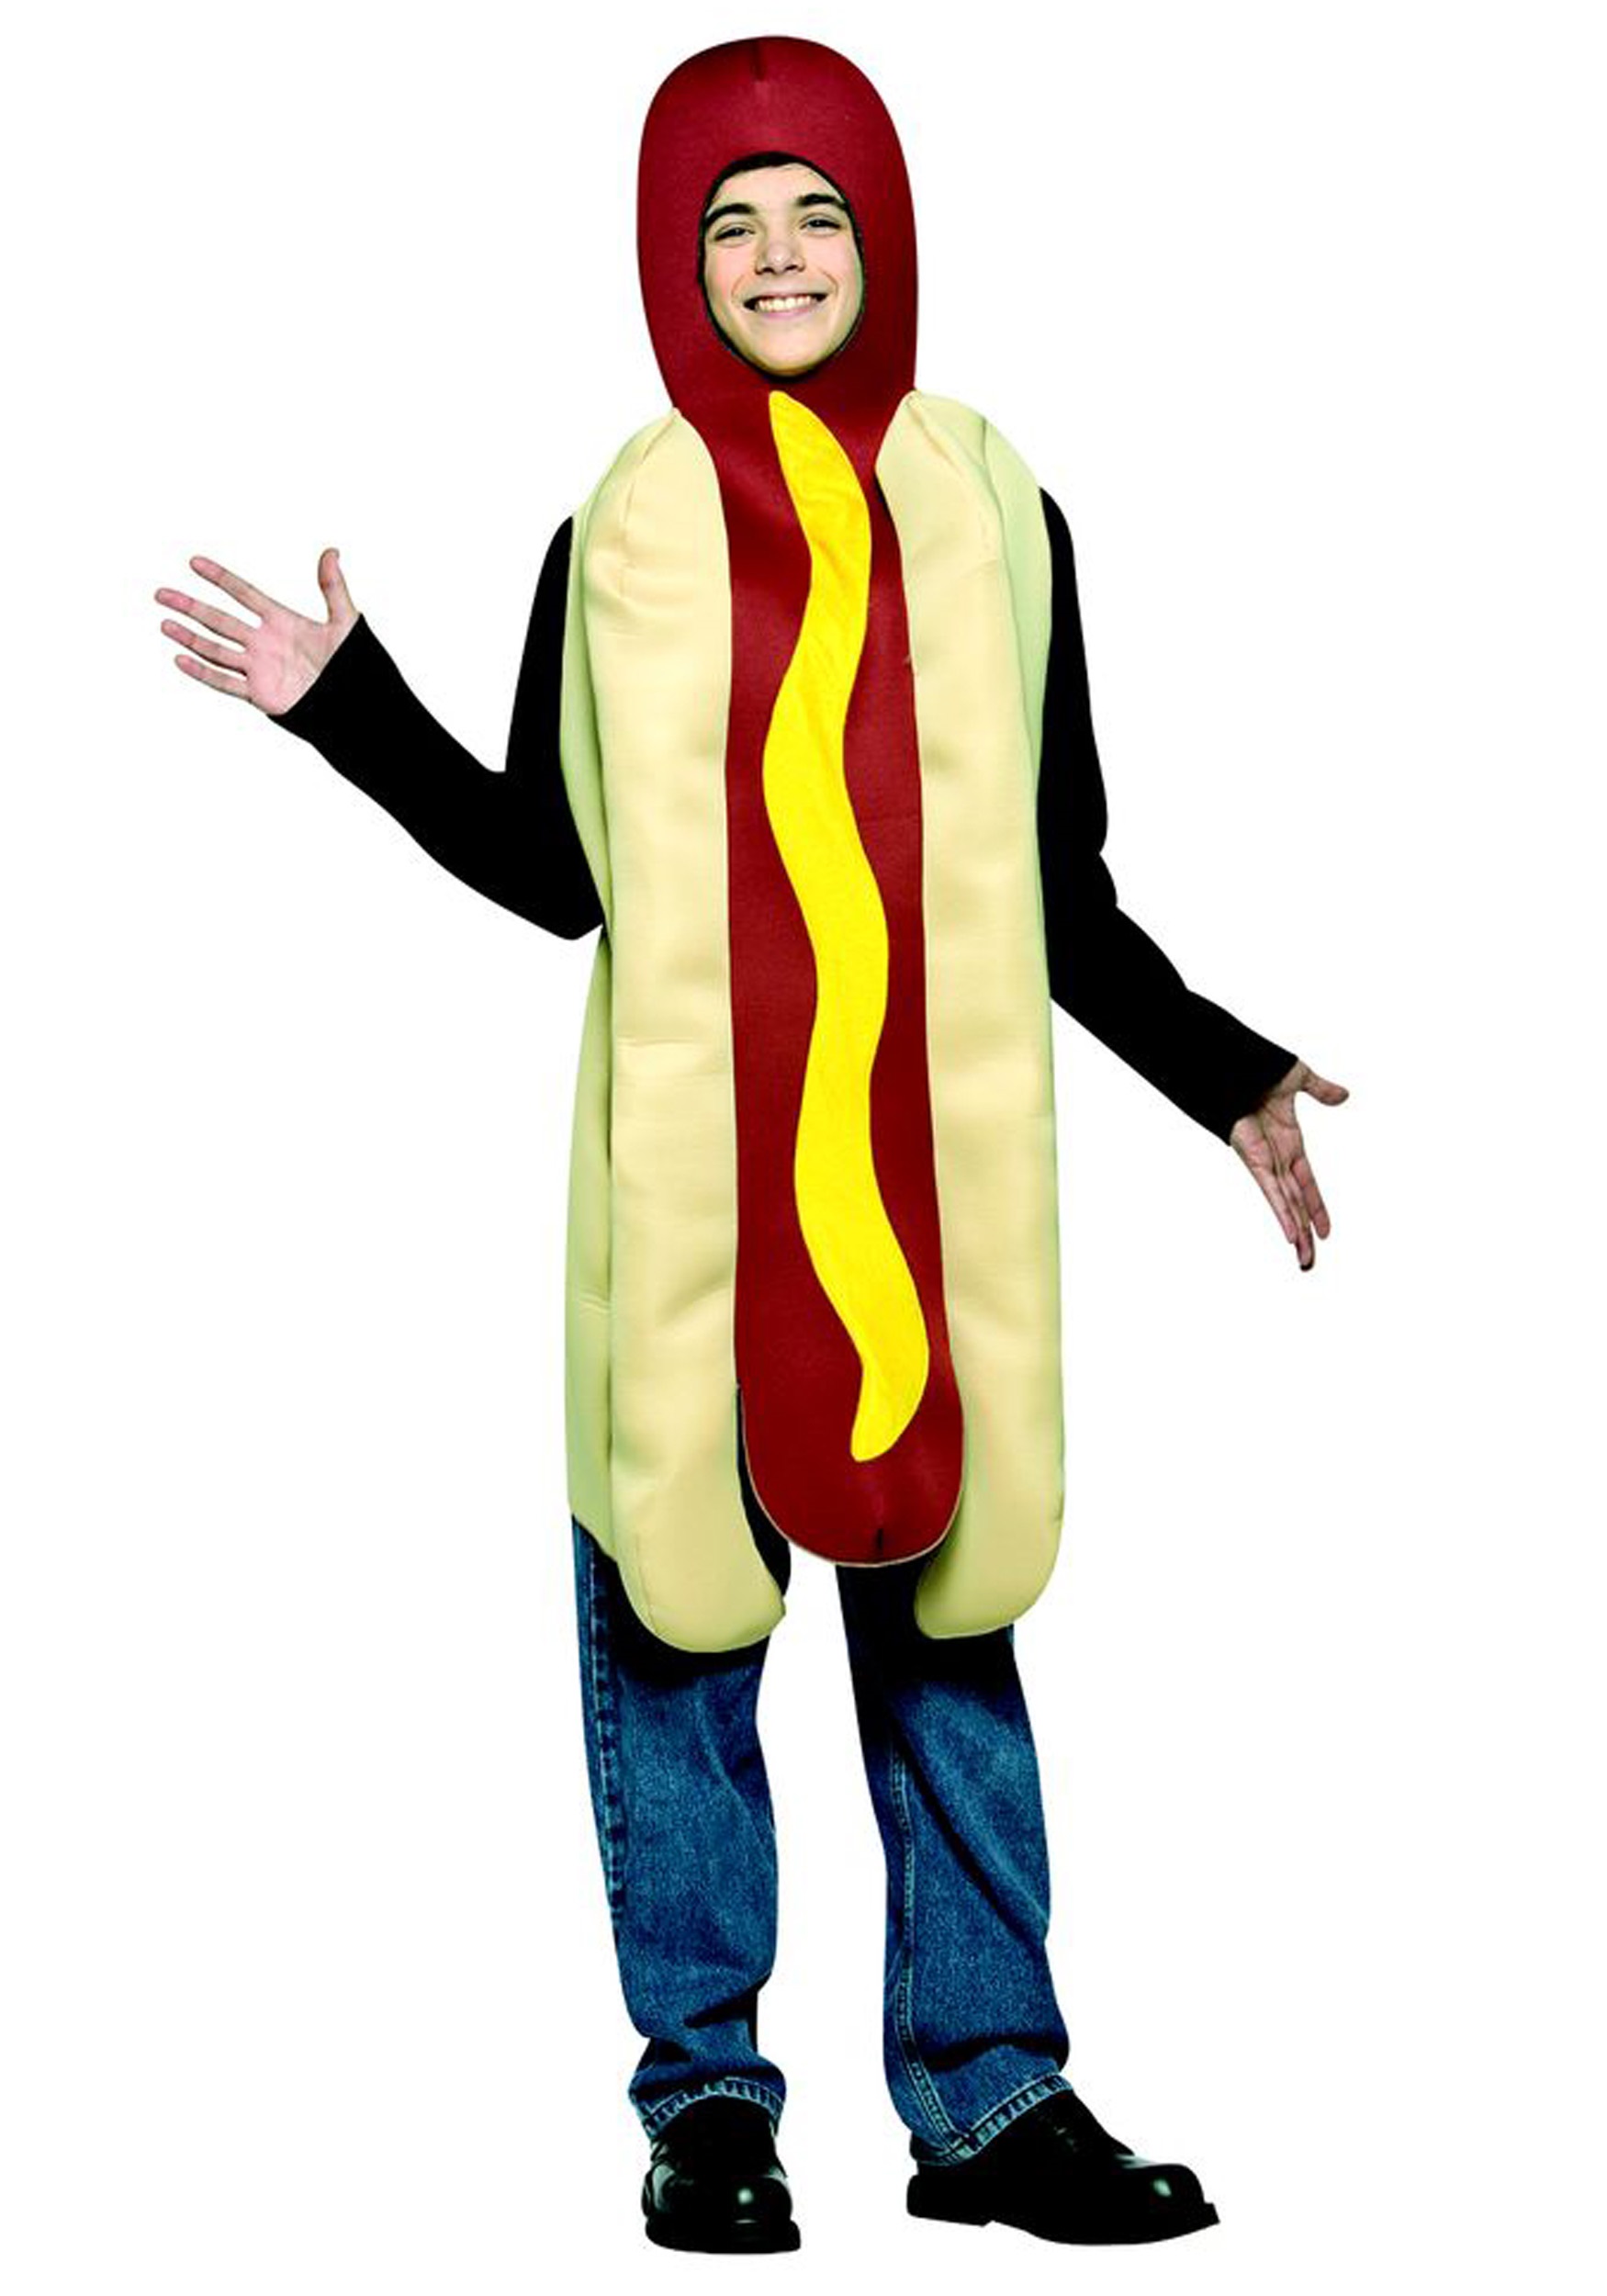 Hot Dog Teen Costume